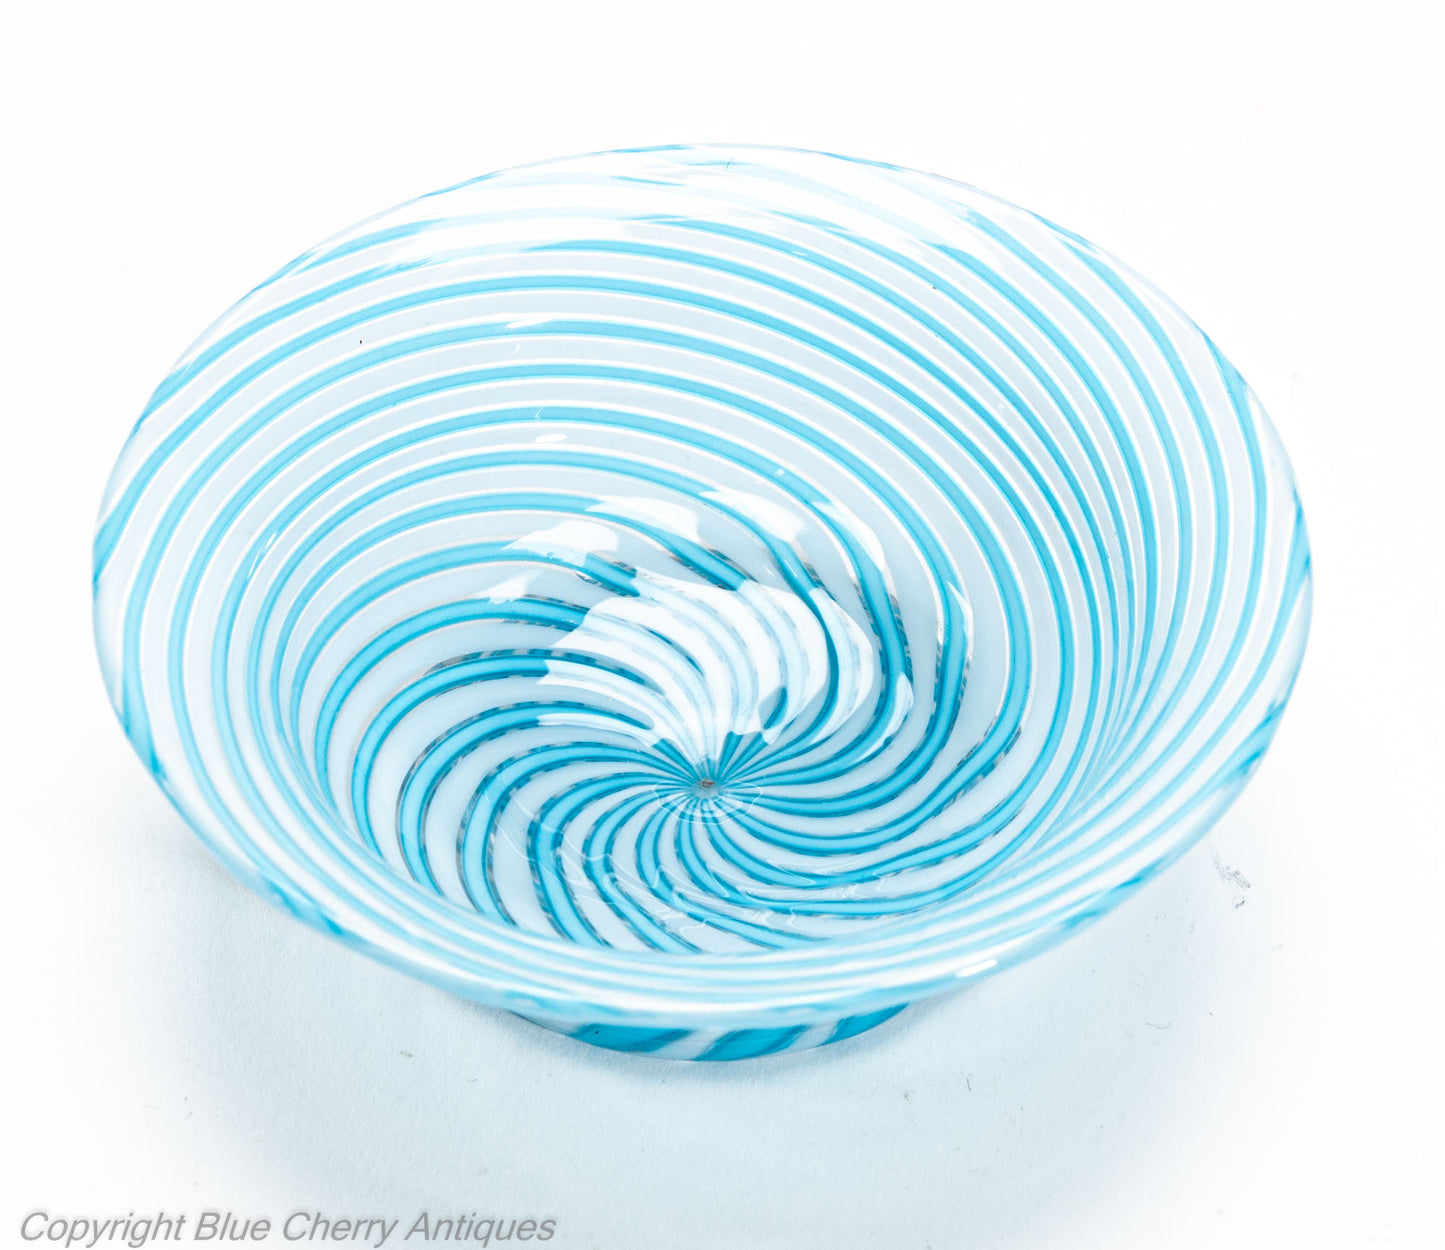 Antique French Clichy Swirl Glass Small Bowl in Aqua Blue - 2nd Empire c1870 (Code 2031)